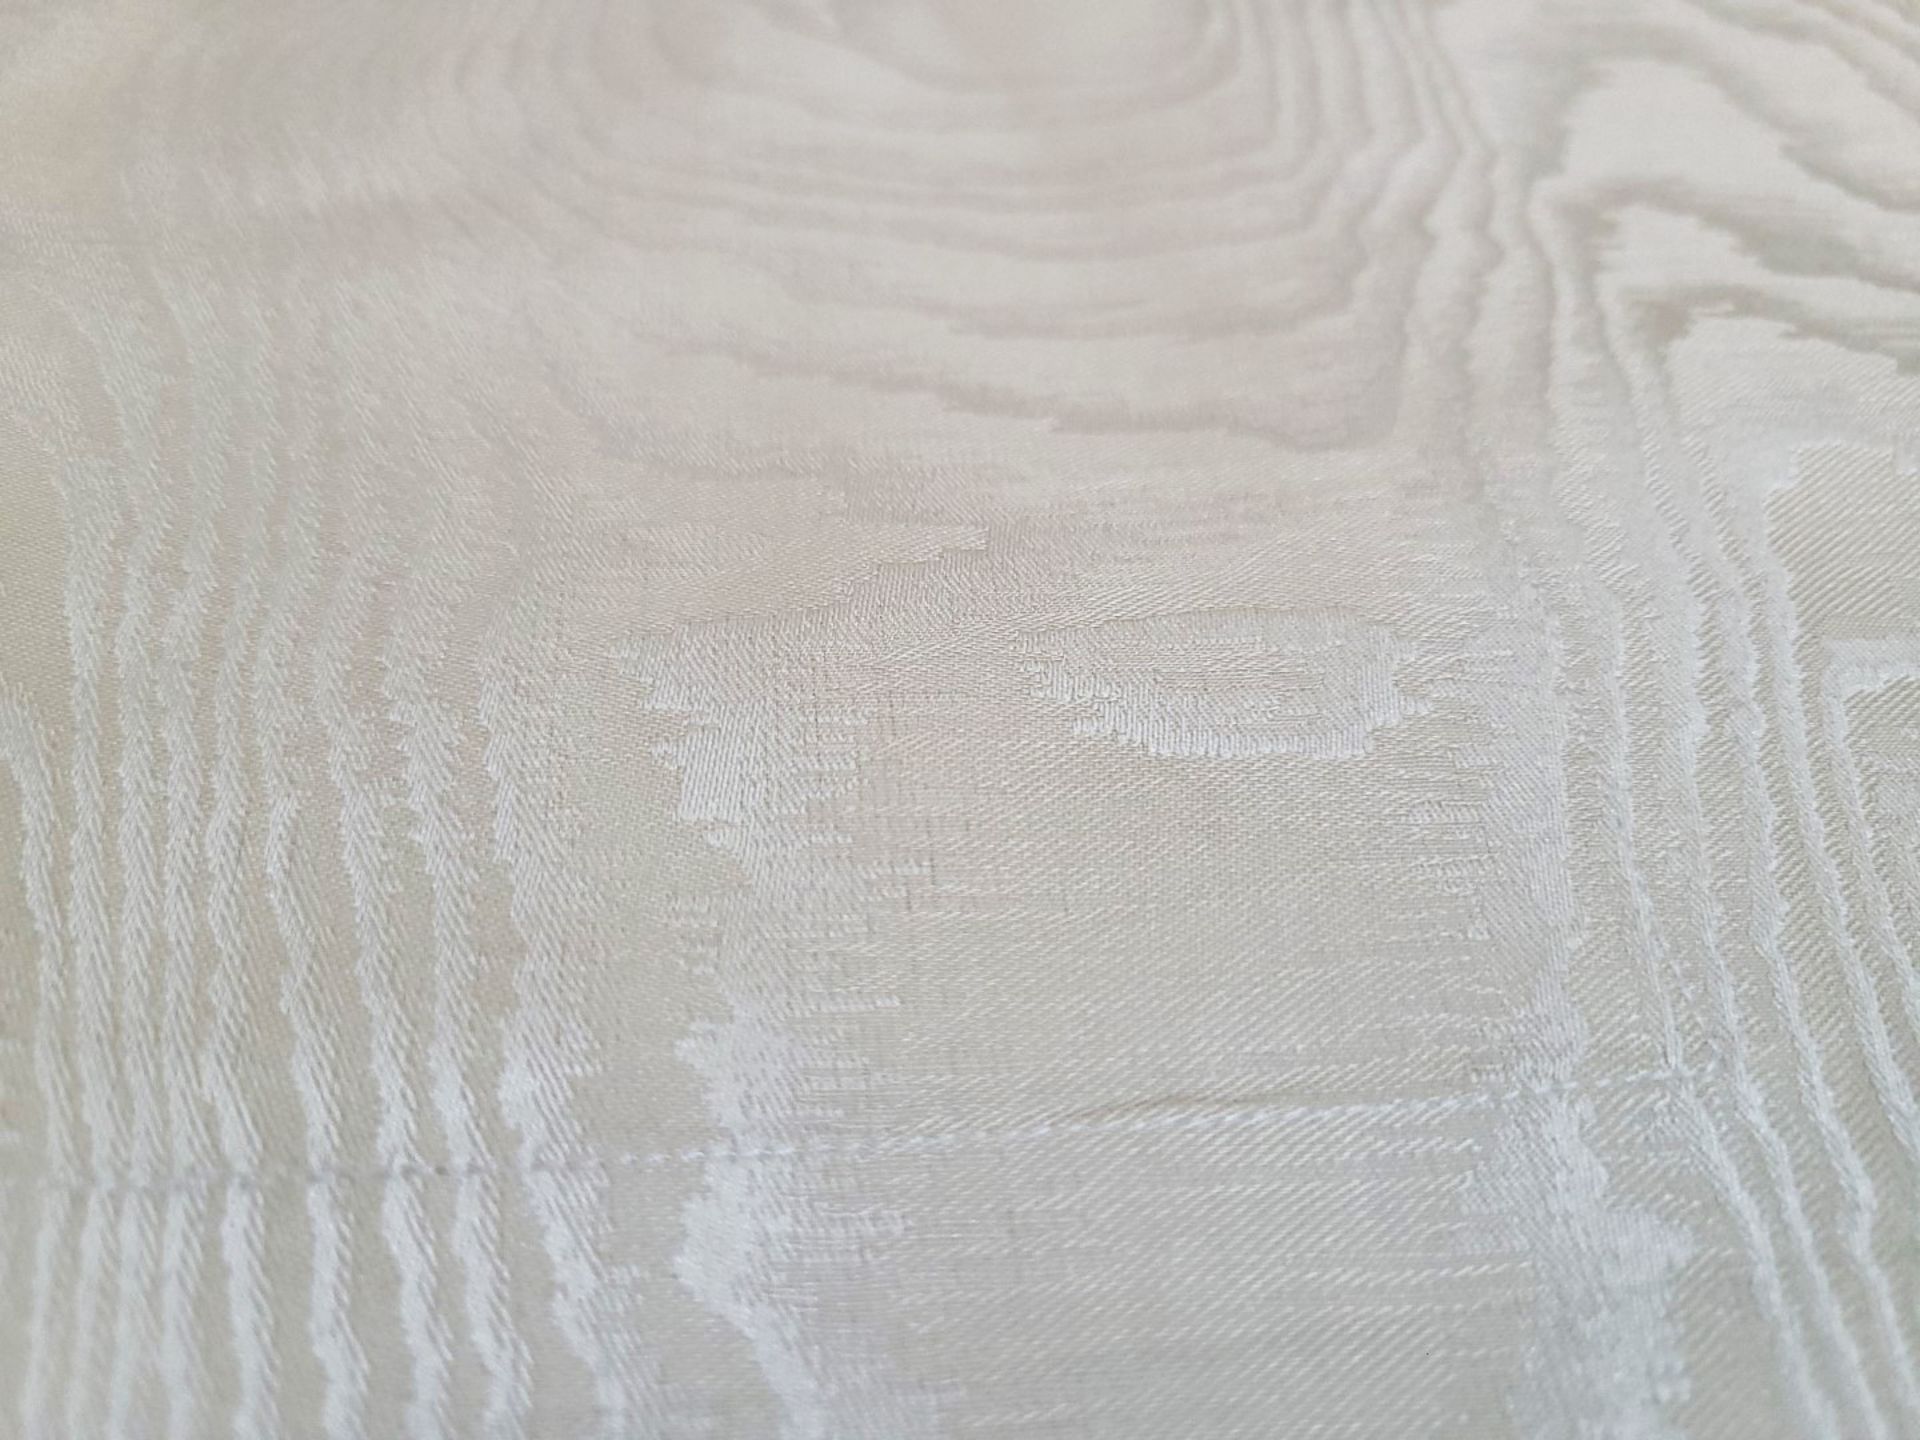 1 x PRATESI ORU Neo Moire Jacquard Beige Pillow Sham 50x70cm - Image 3 of 4